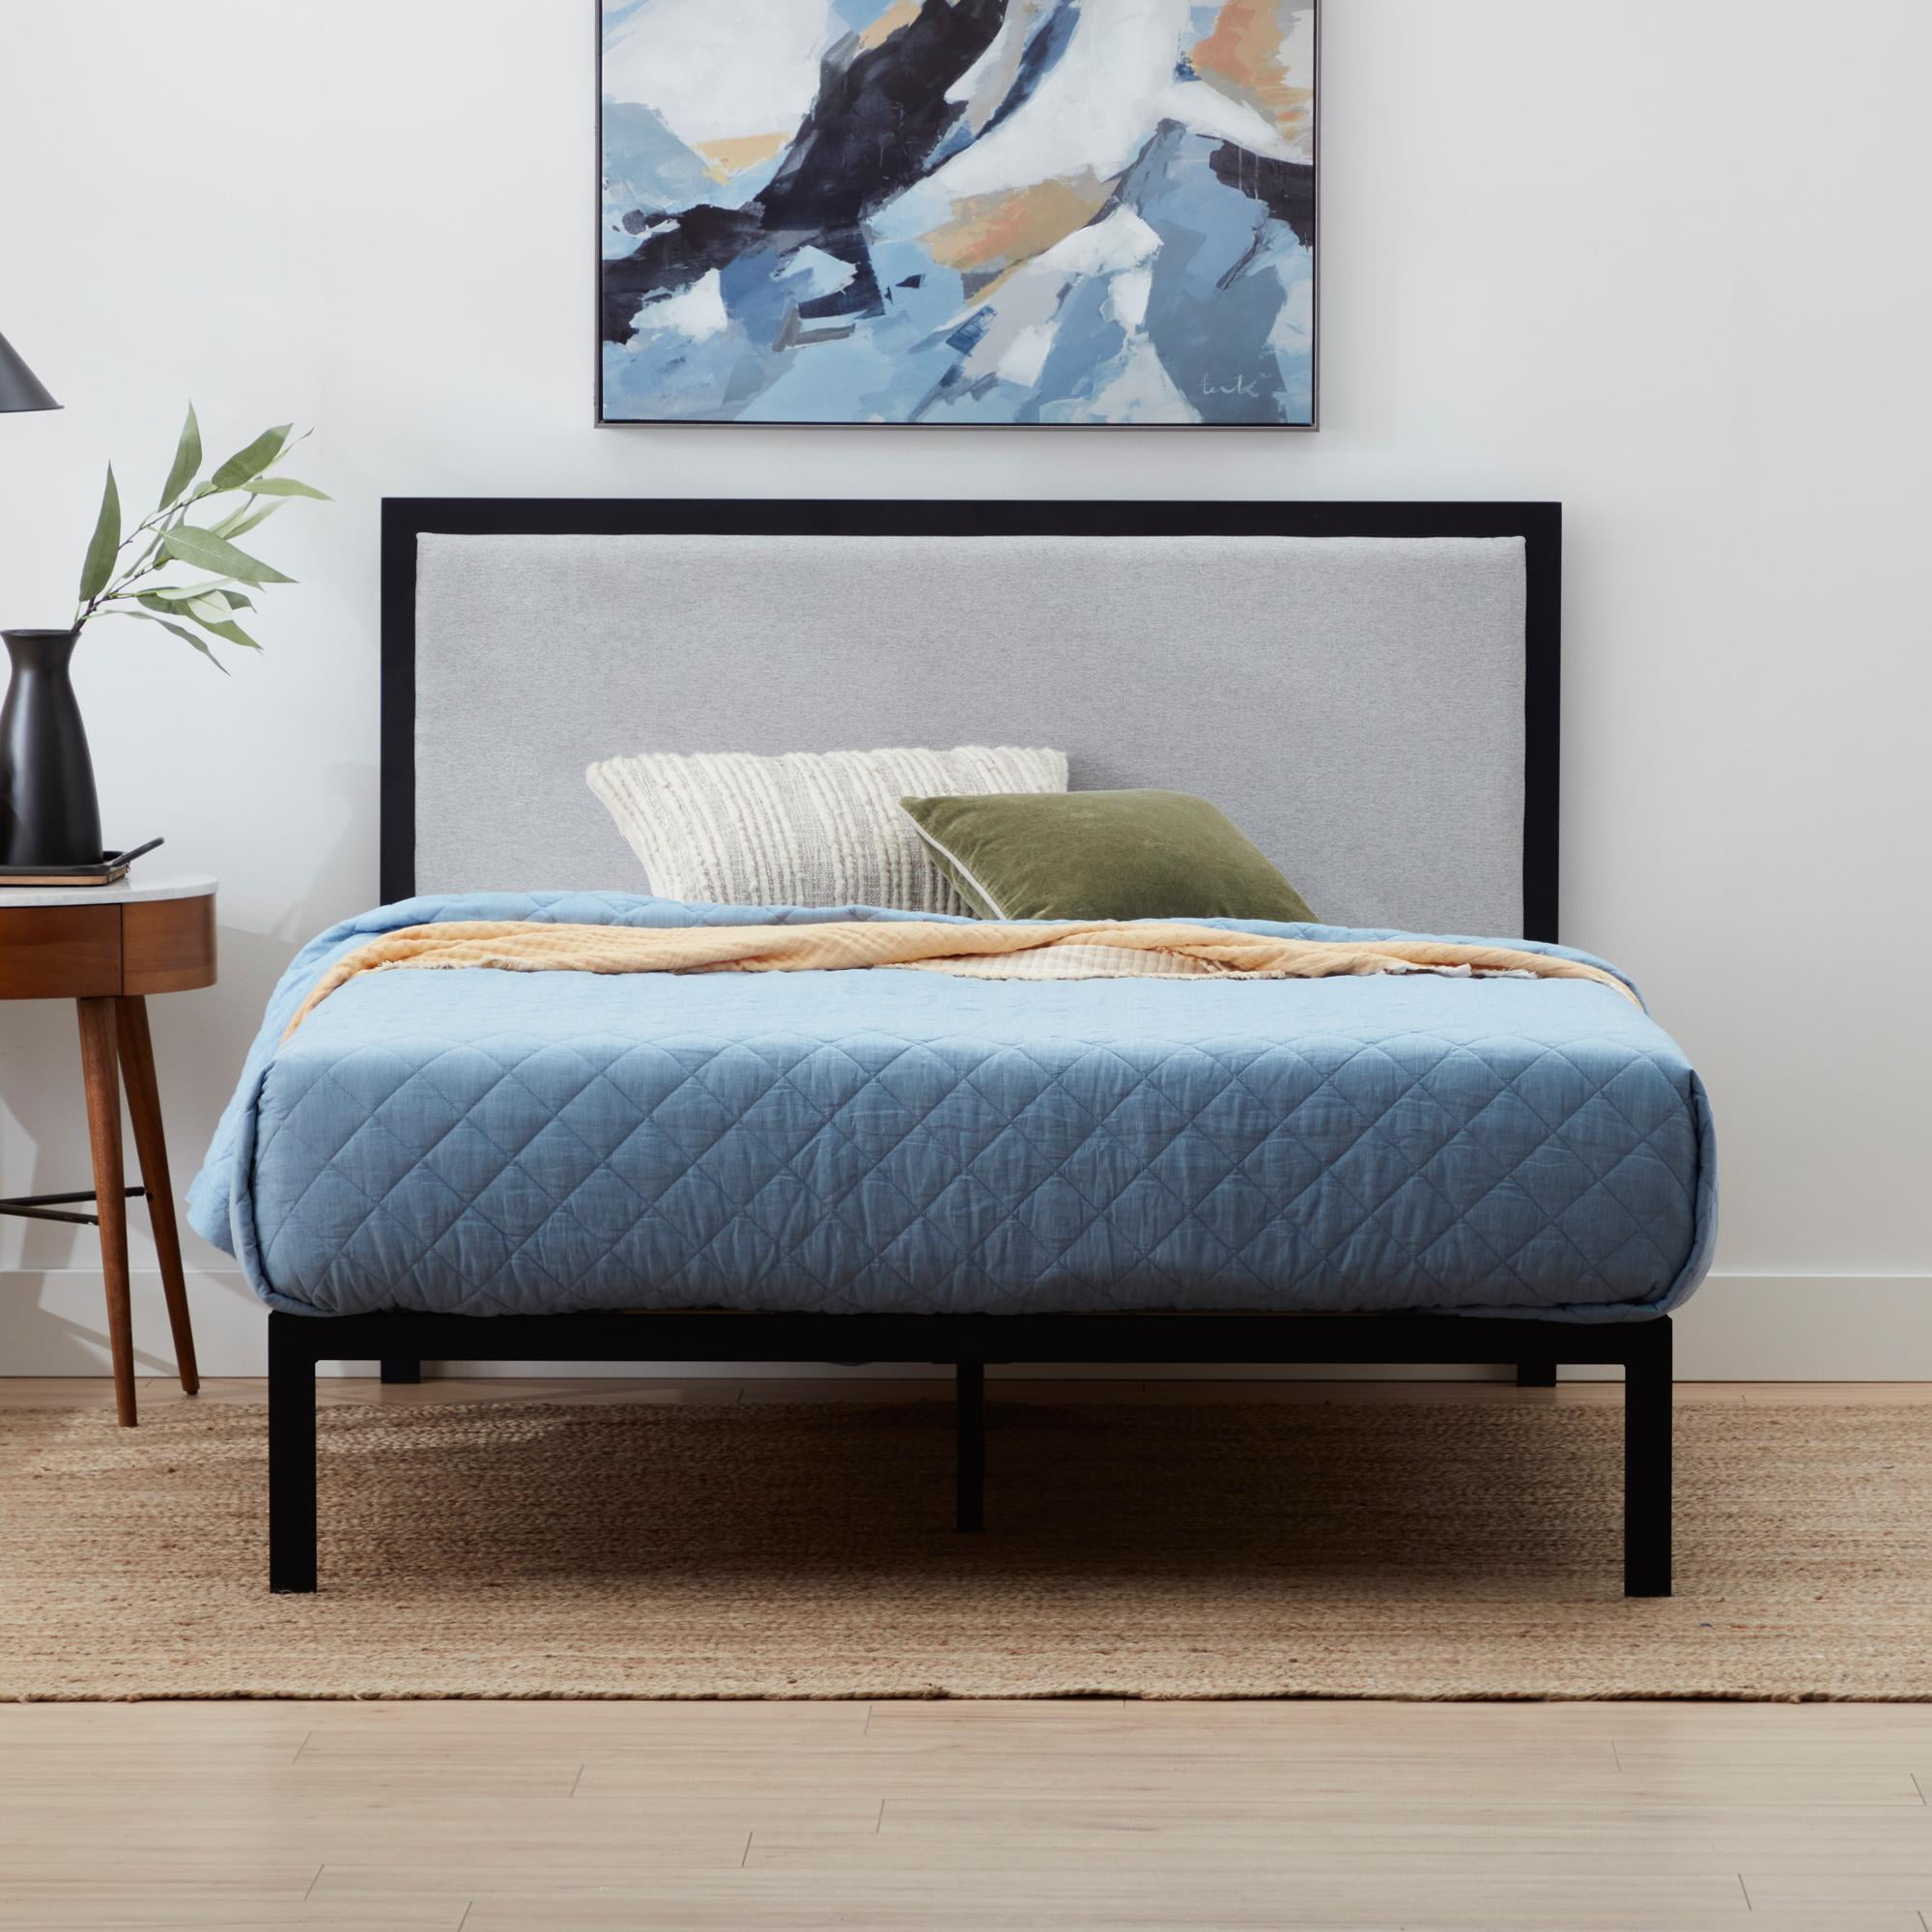 Full/Queen Size Bed Headboard Metal Black Bedroom Home Furniture Head Board NEW 